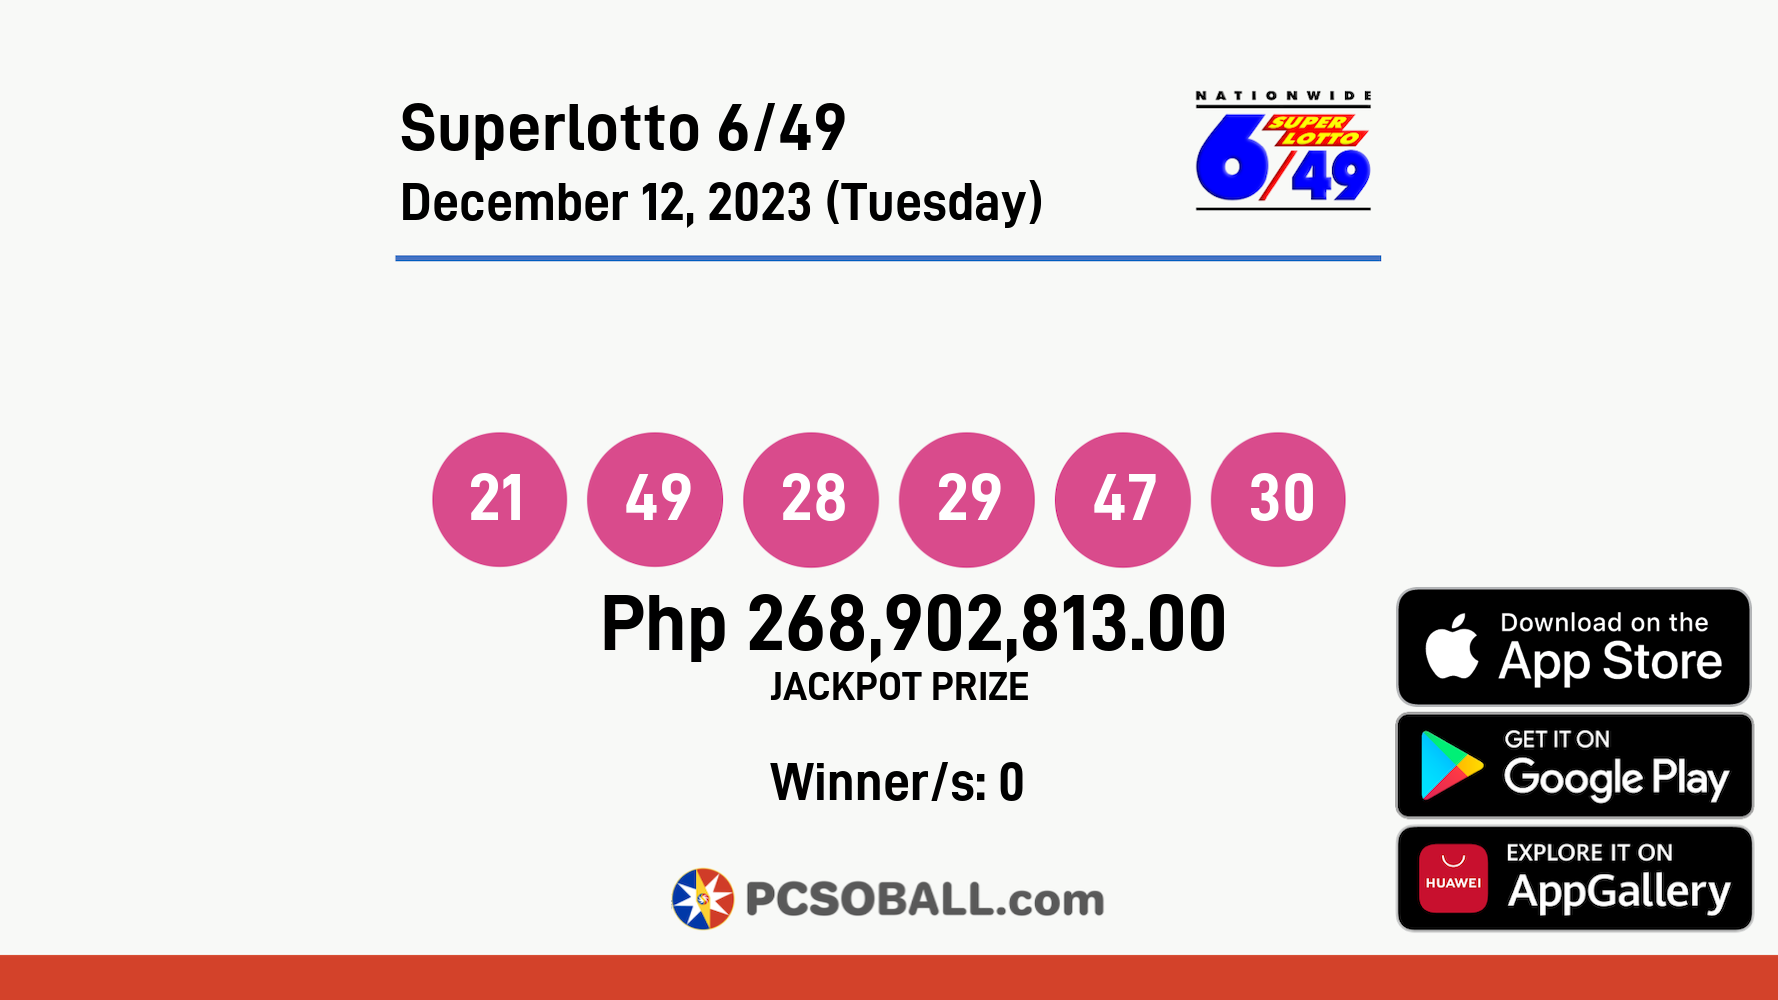 Superlotto 6/49 December 12, 2023 (Tuesday) Result